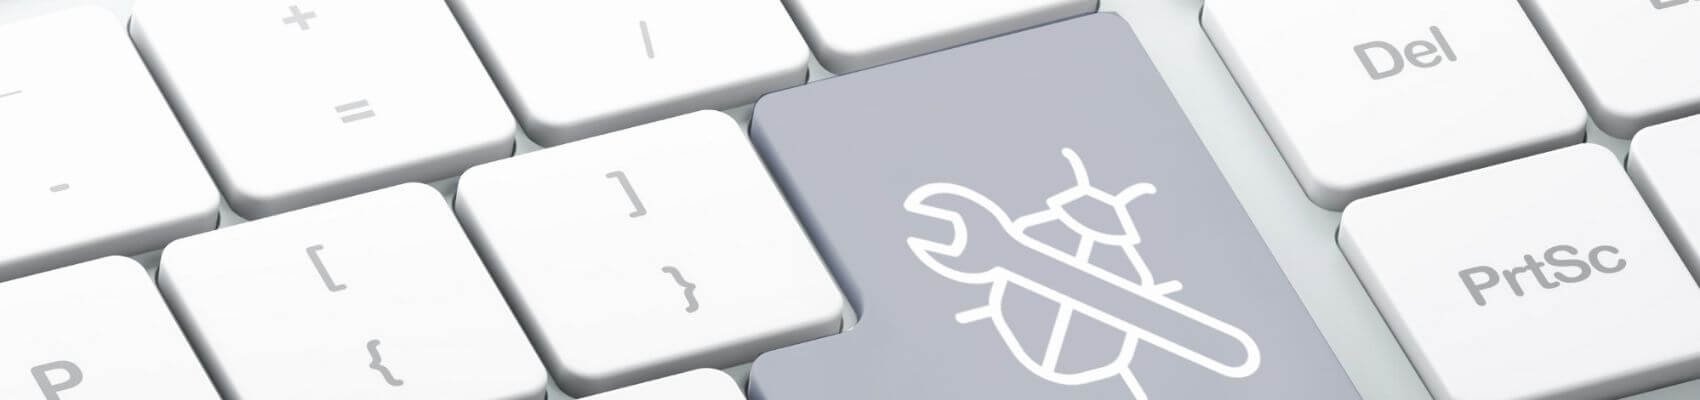 Tastatur mit Käfer-Symbol "Bugs & Fixes"